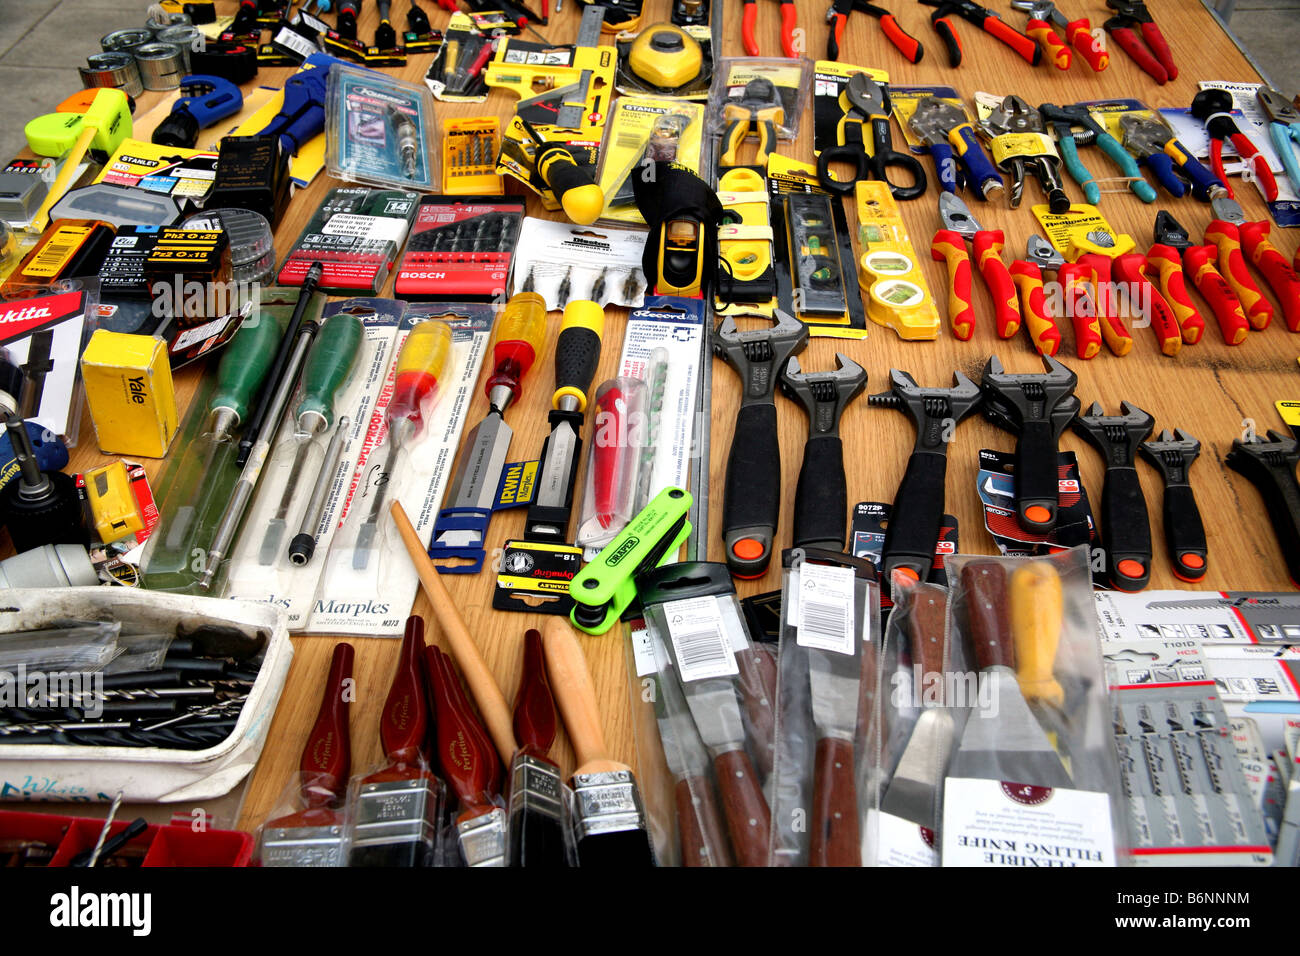 Tools on London street market stall Stock Photo - Alamy